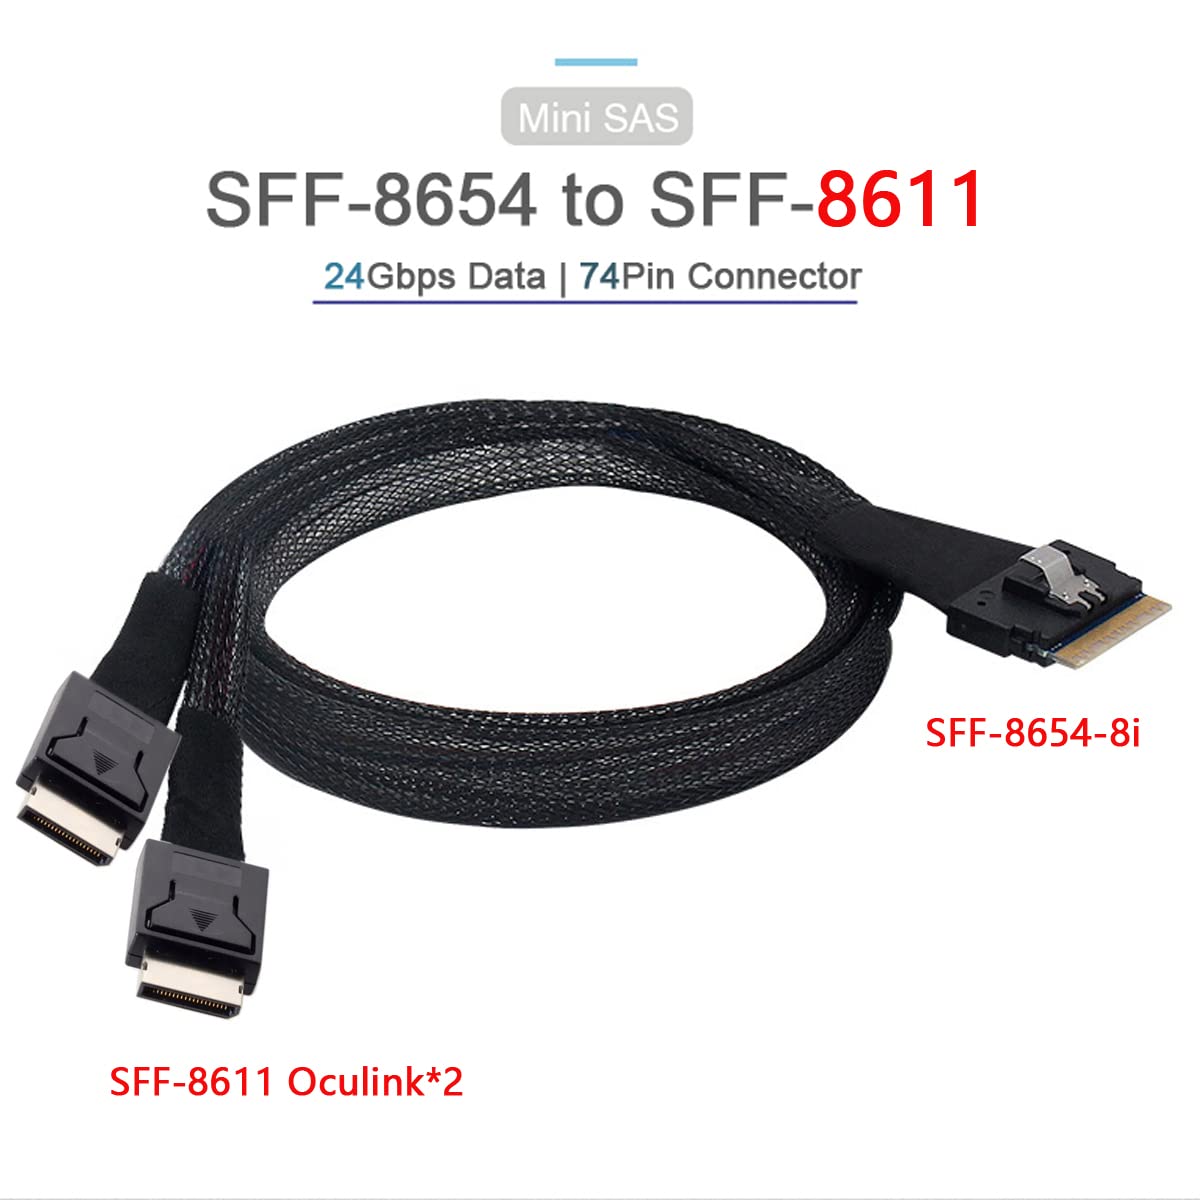 PCI-E Ultraport Slimline SAS Slim 4.0 SFF-8654 8i 74pin to Dual Oculink SFF-8611 Cable 0.5m